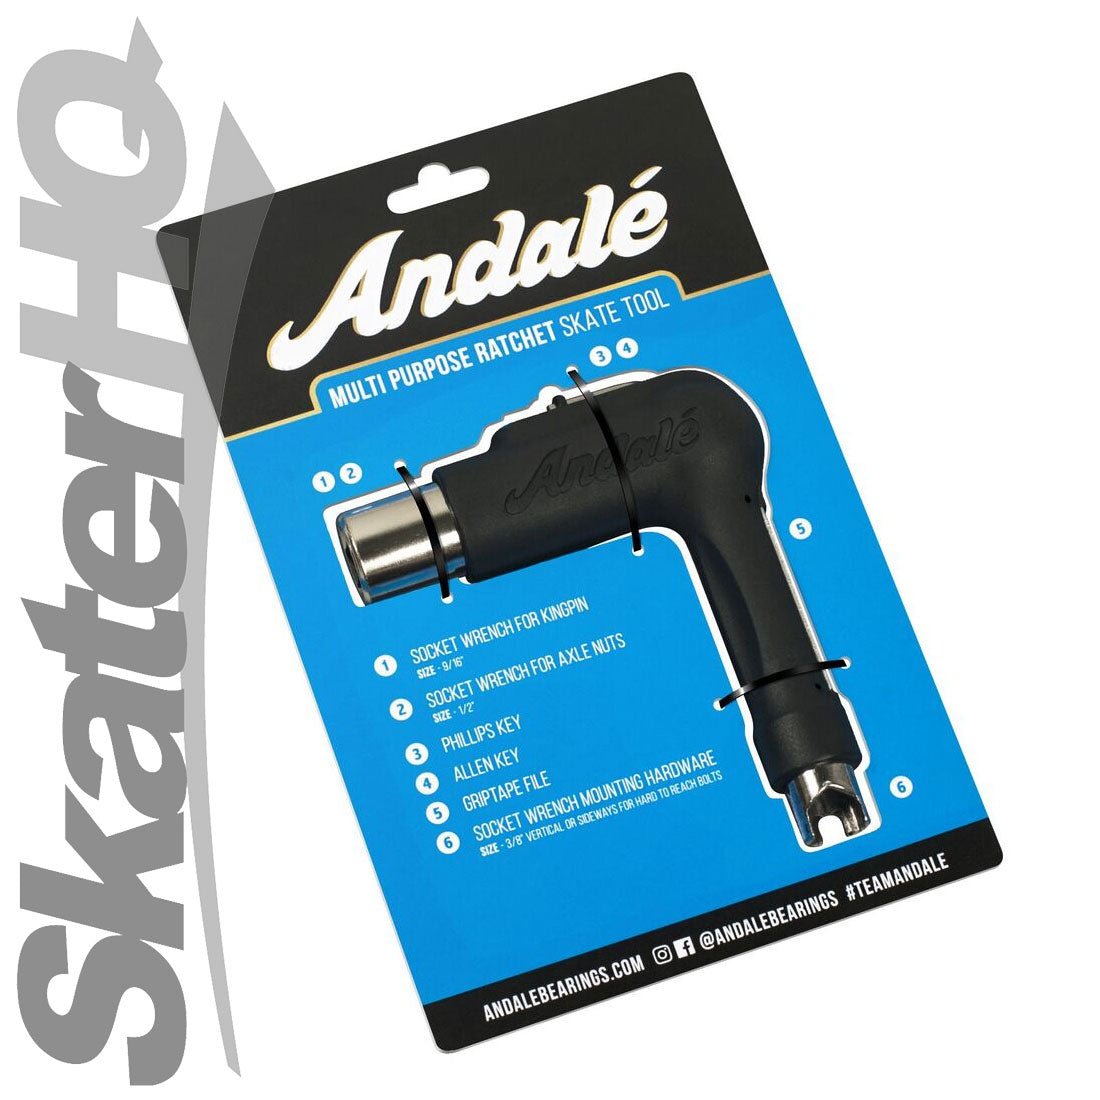 Andale Multi Purpose Ratchet Tool - Black Skate Tool